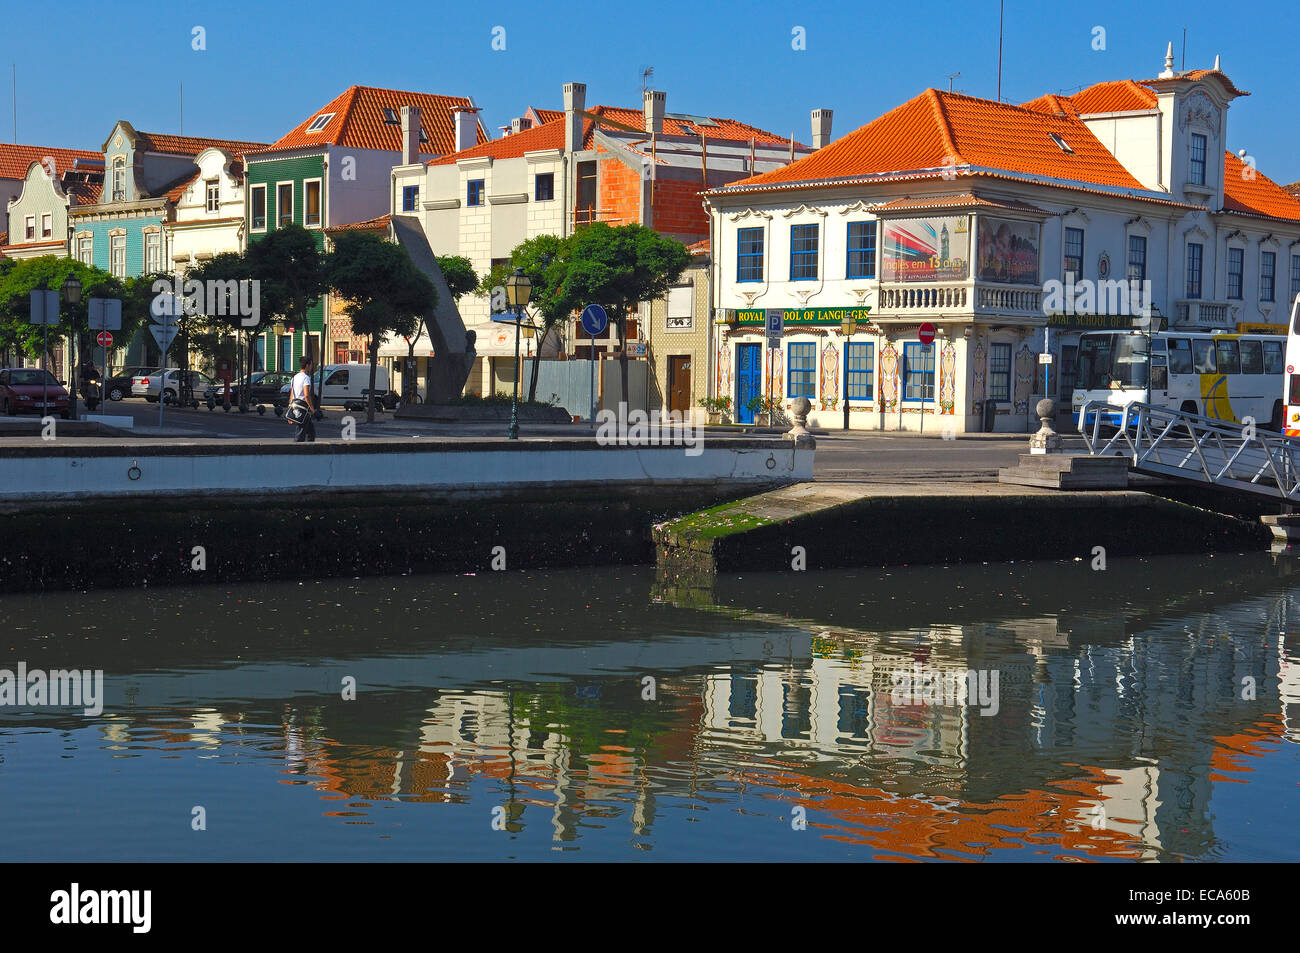 Canal central, Aveiro, Beiras region, Portugal, Europe Stock Photo